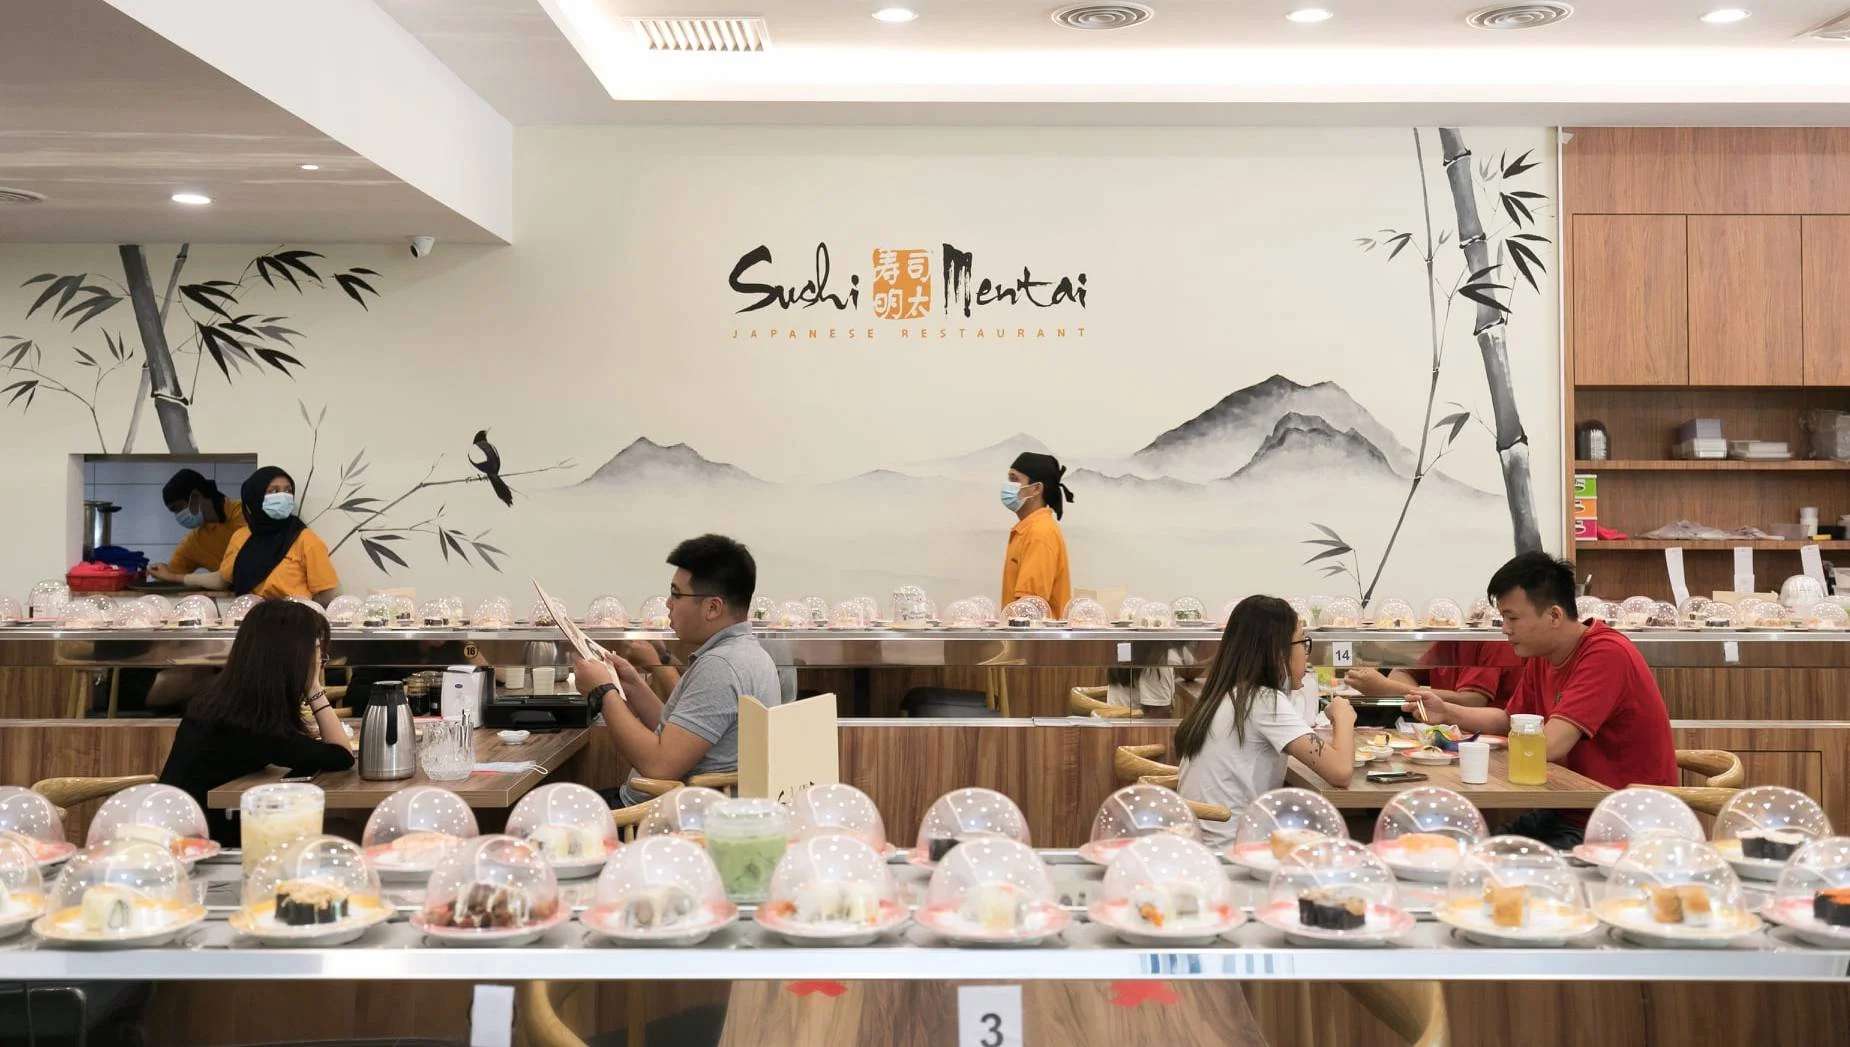 Is Sushi Mentai Halal?